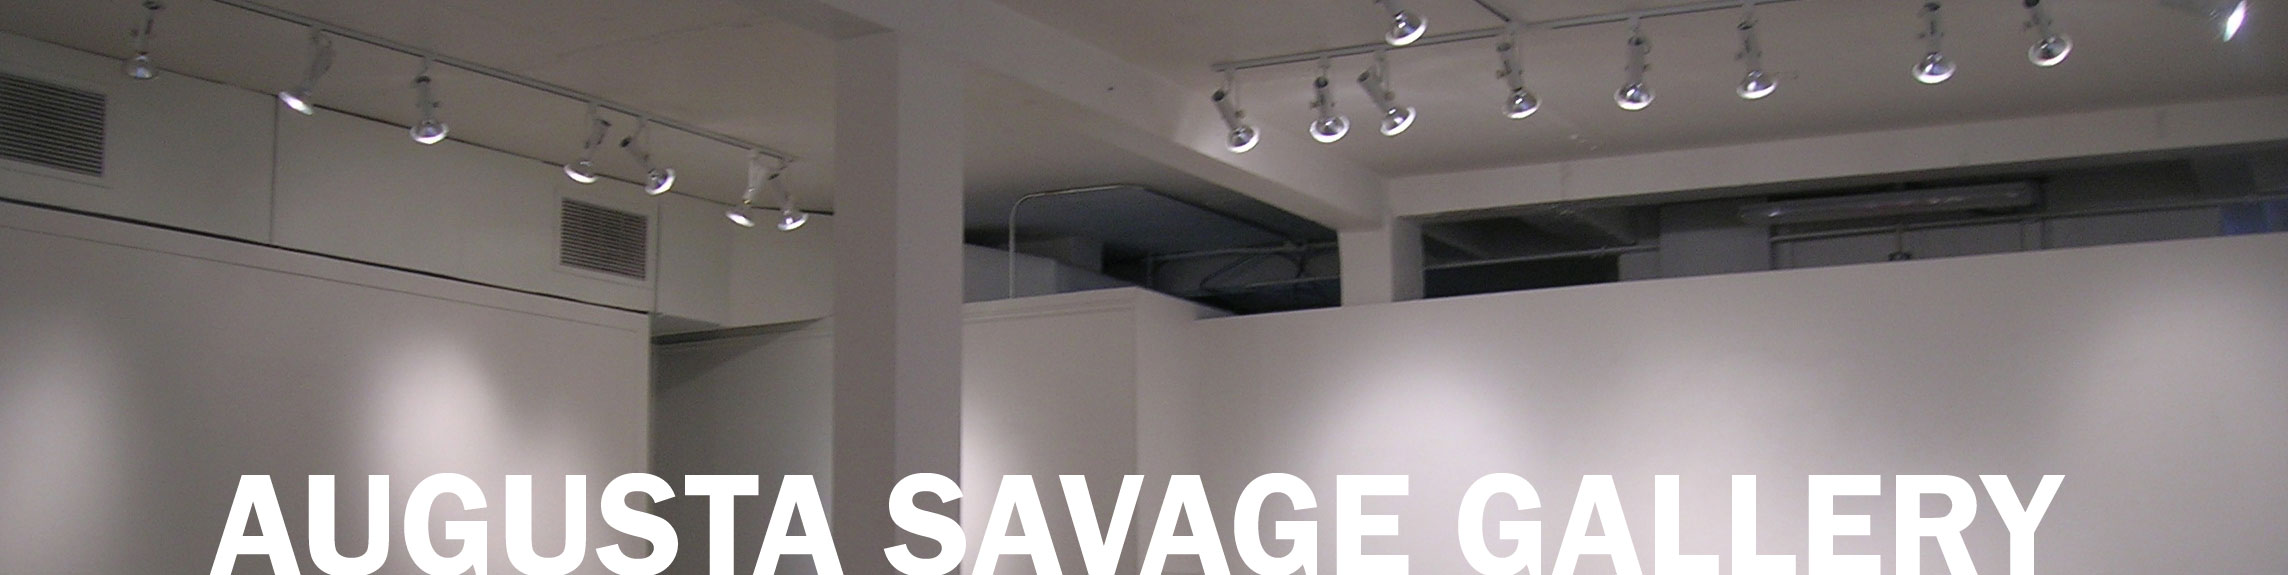 Augusta Savage Gallery